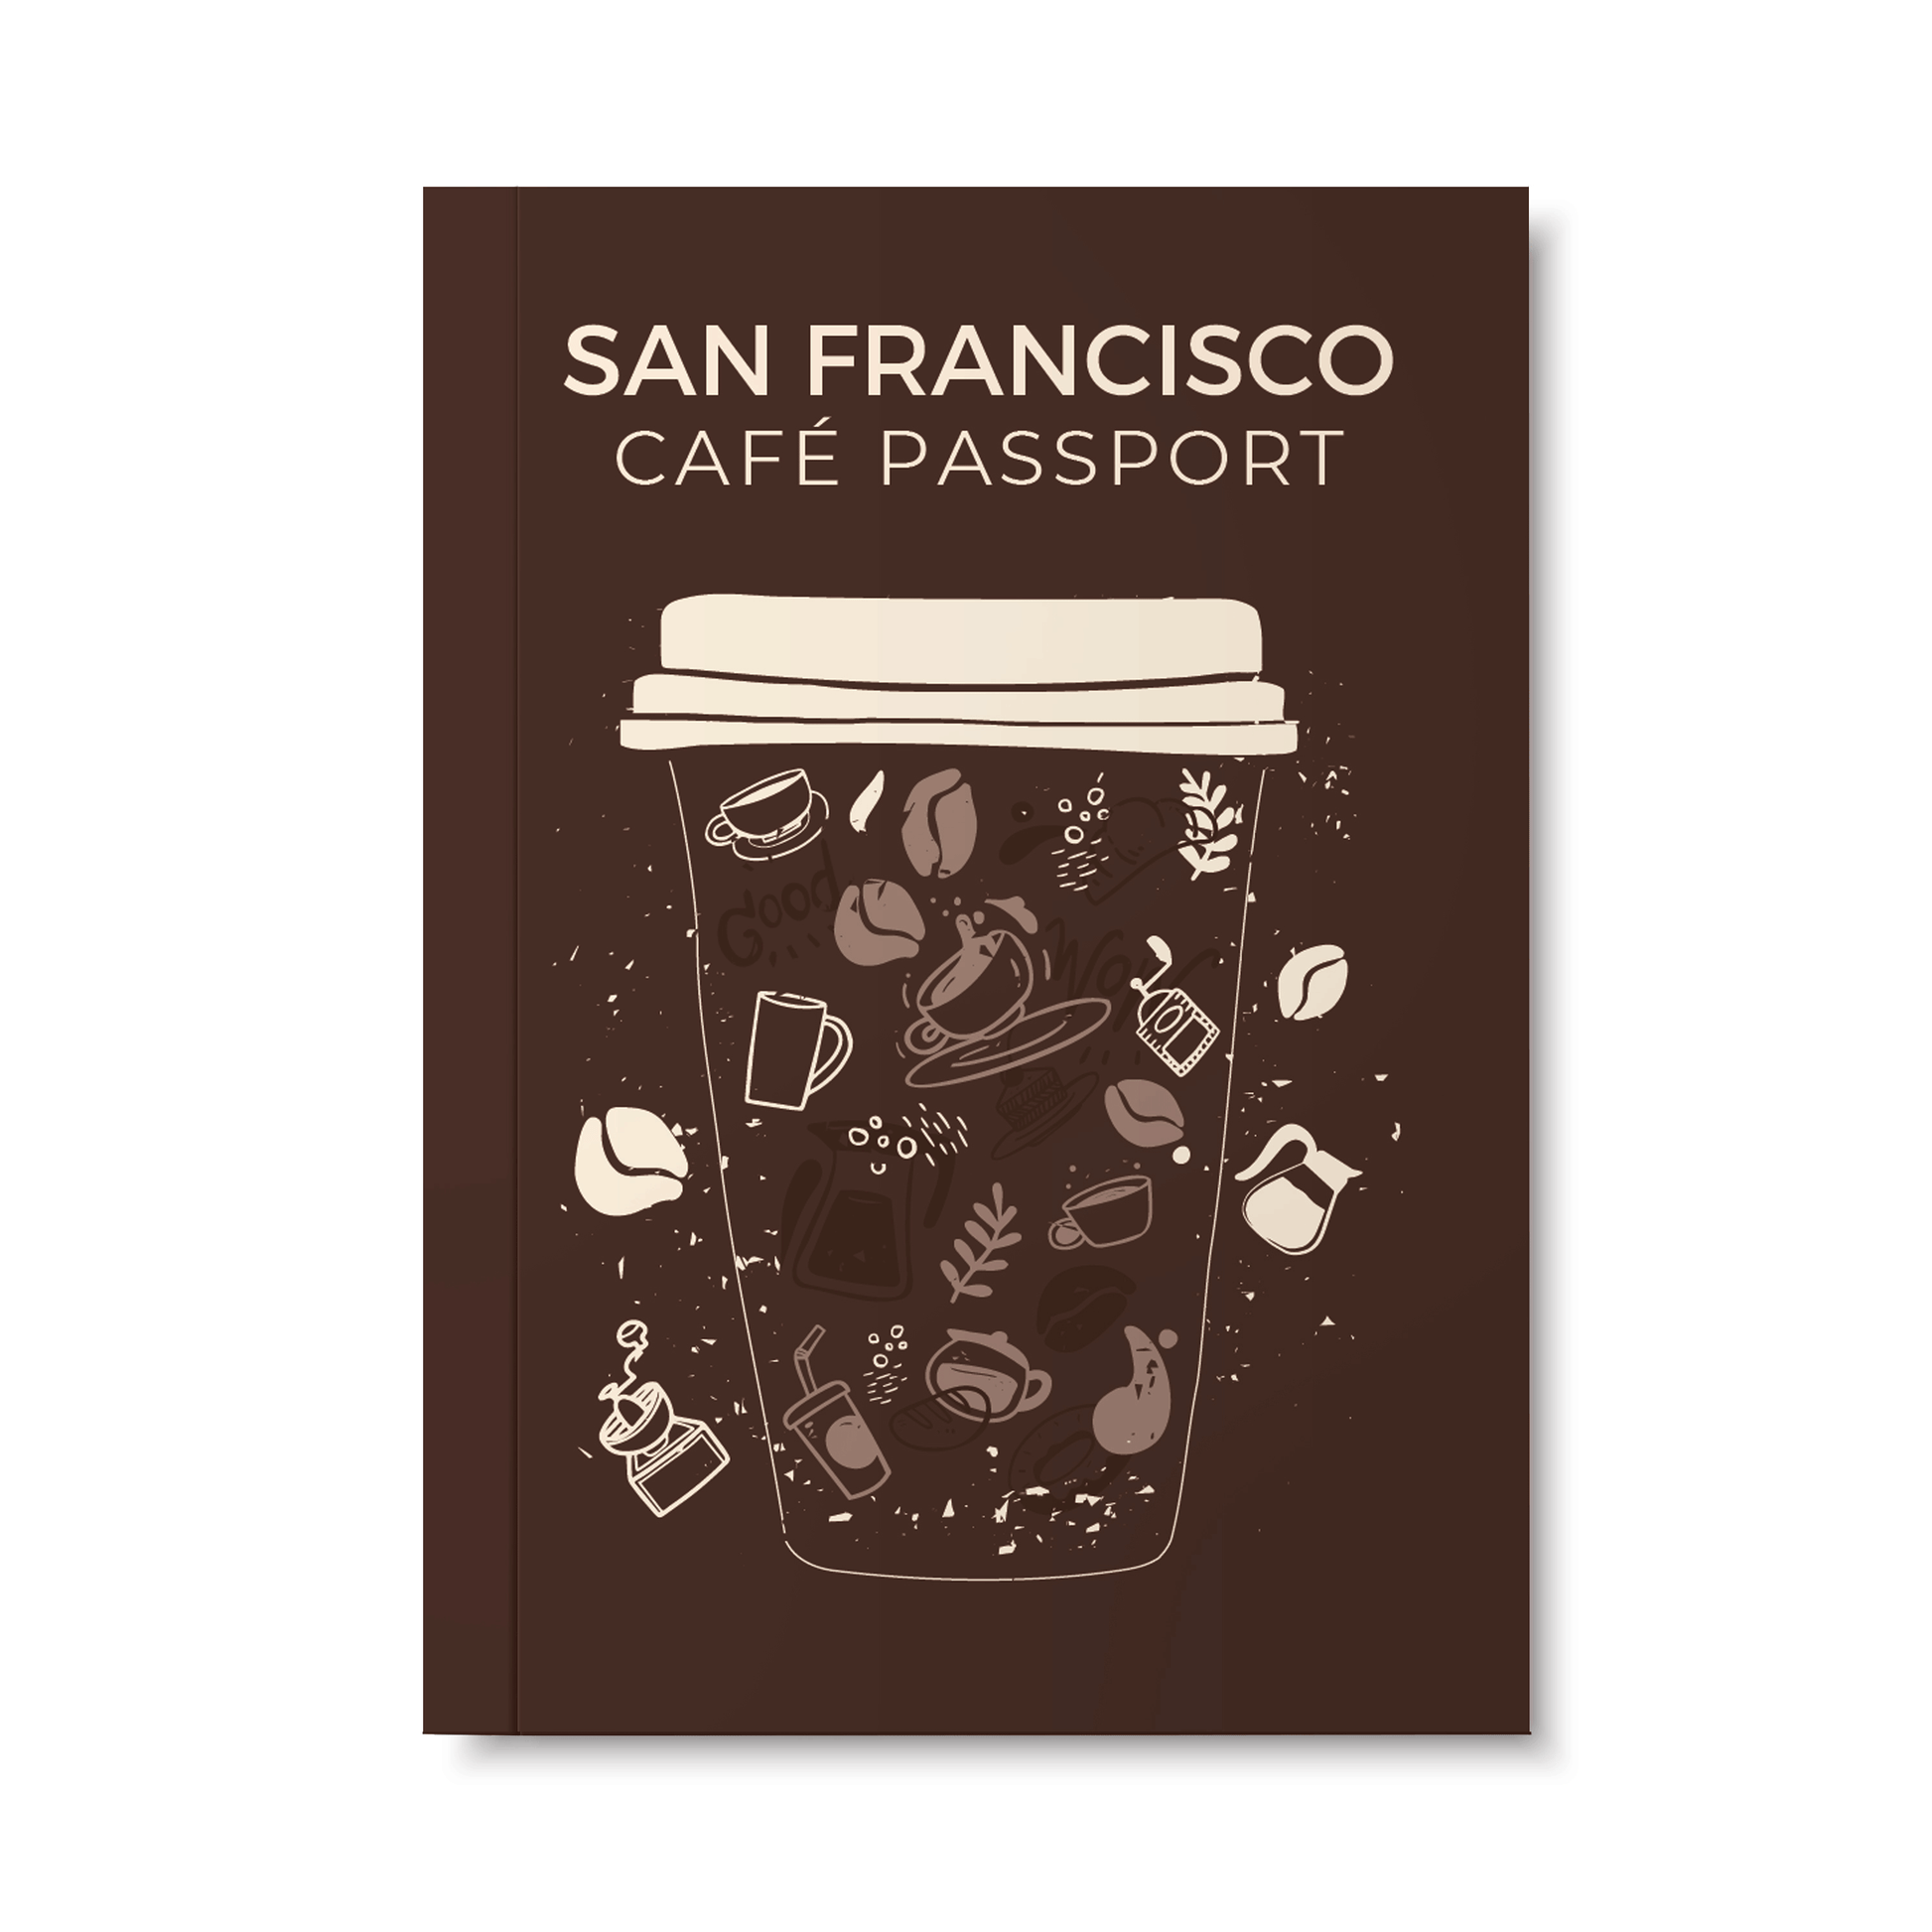 San Francisco Cafe Passport